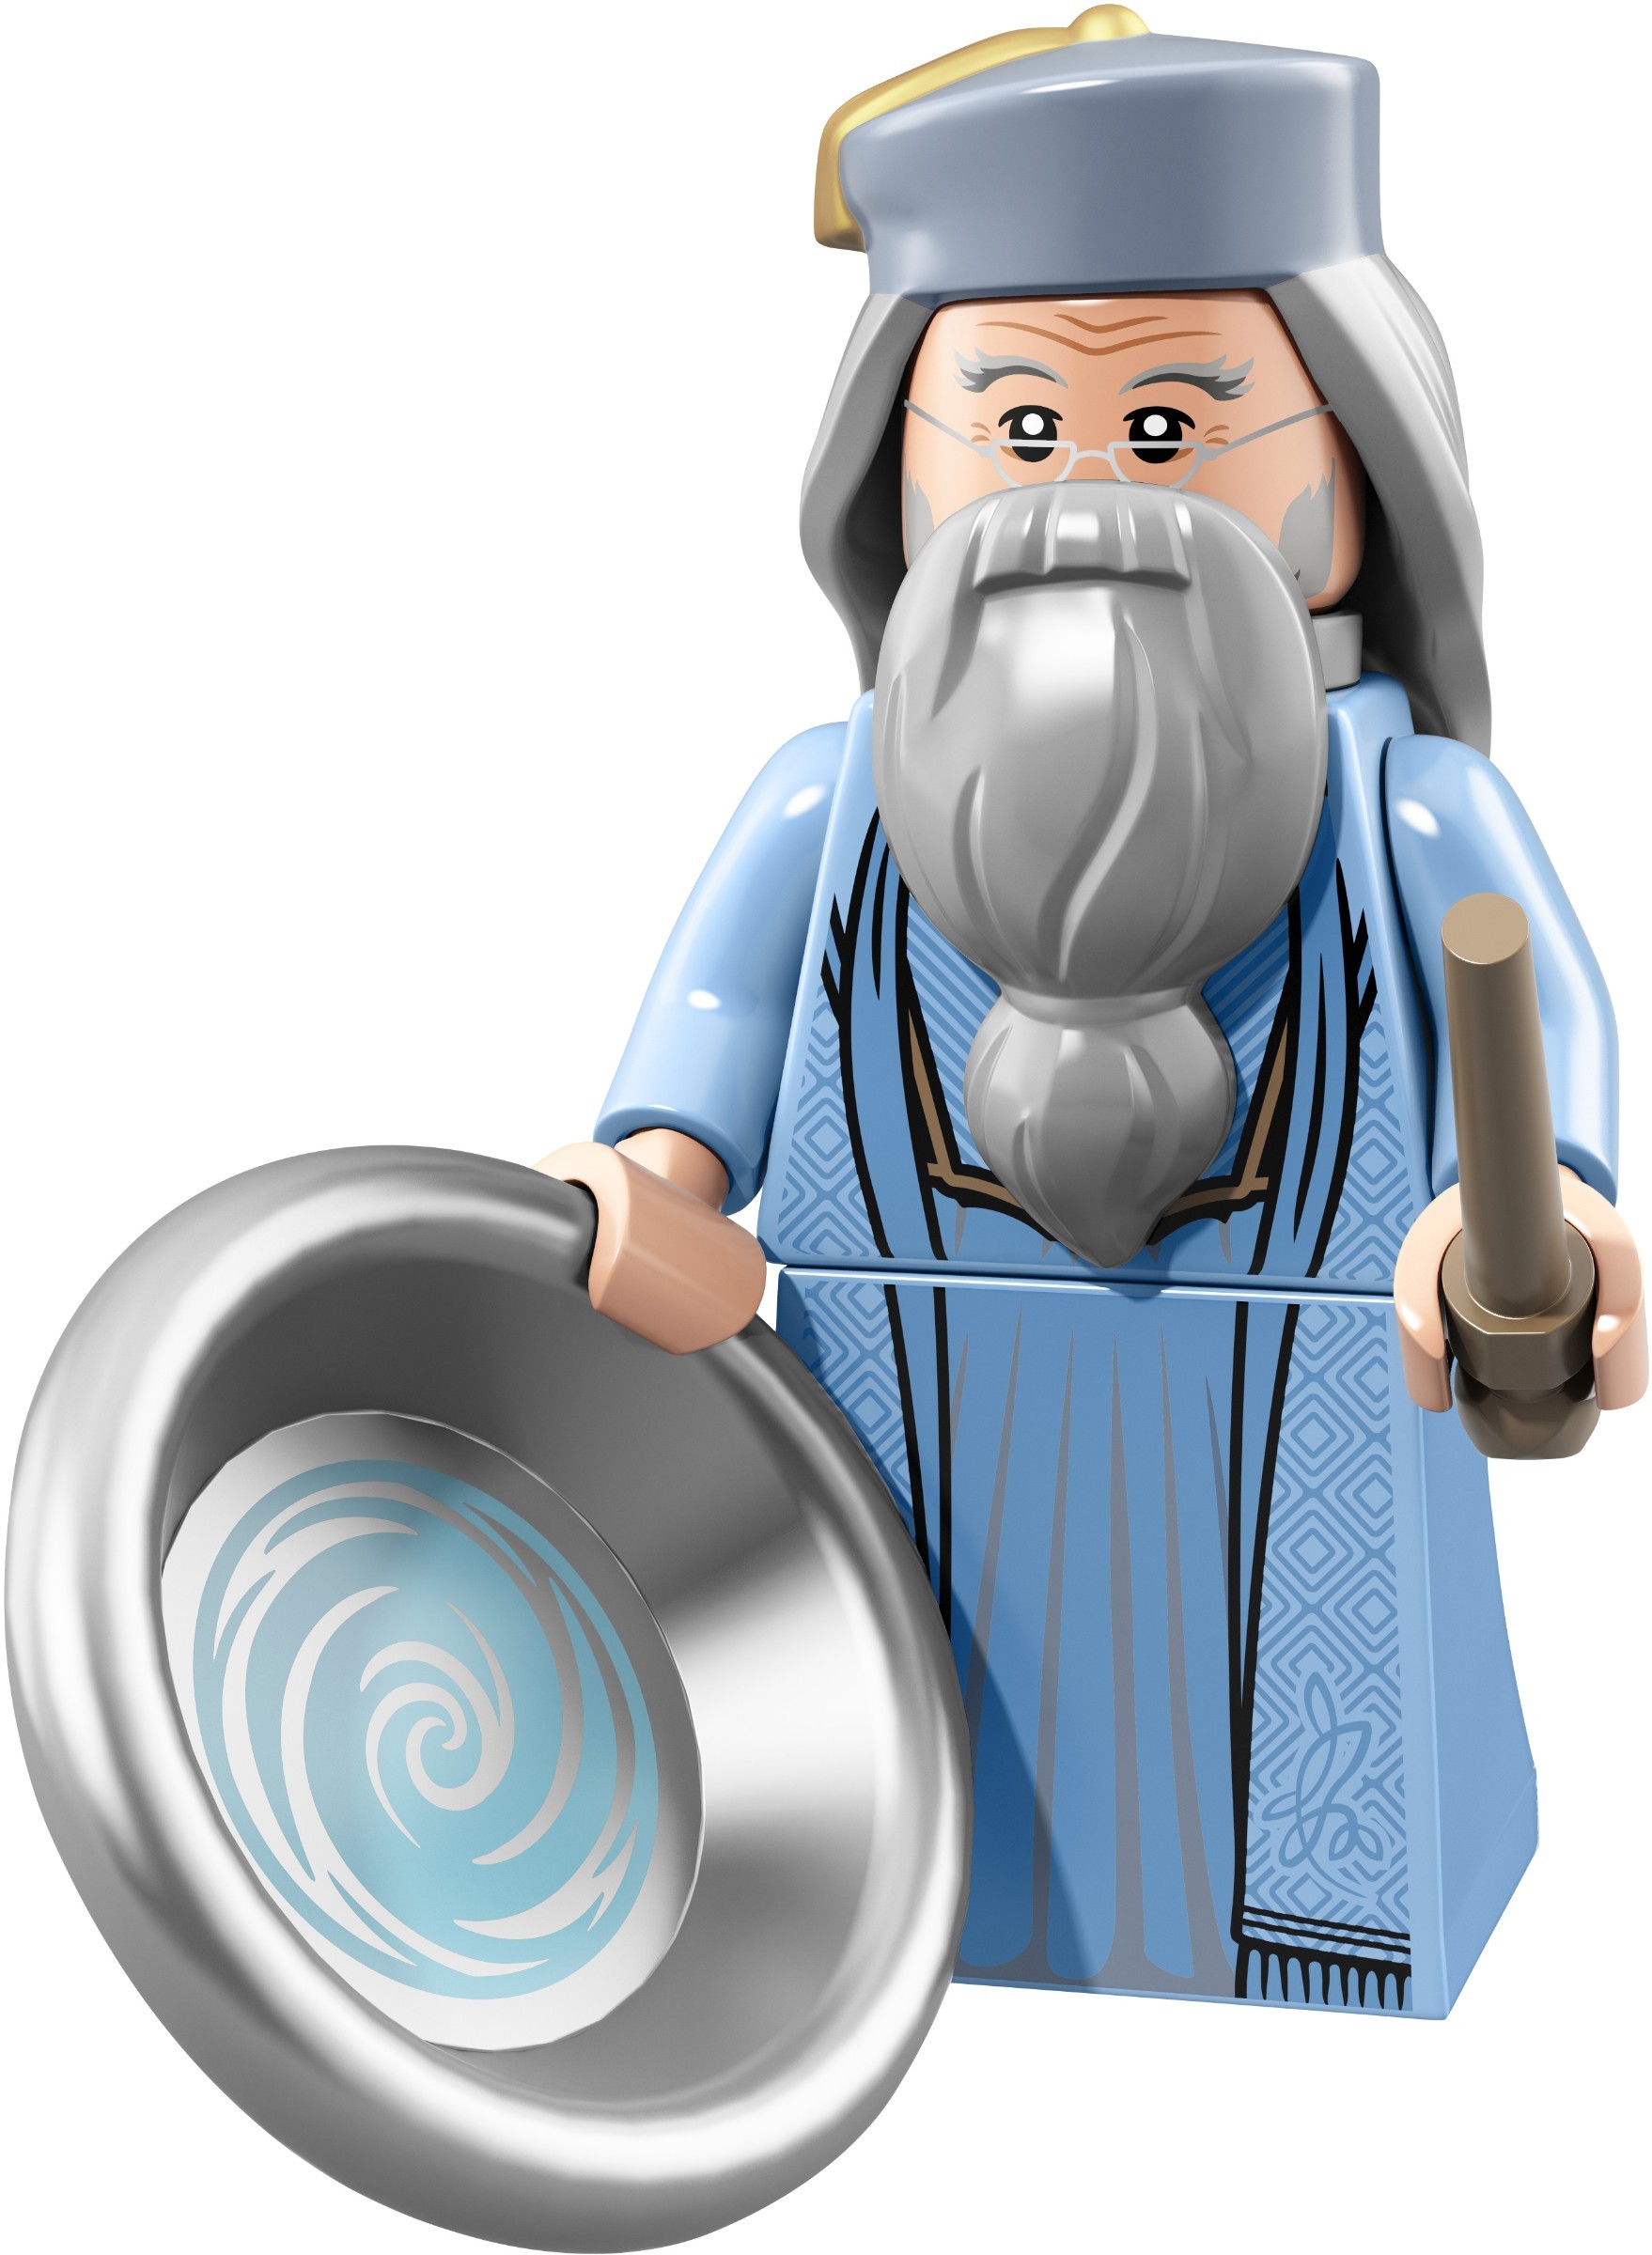 Lego Harry Potter Series 2 Minifigure Albus Dumbledore